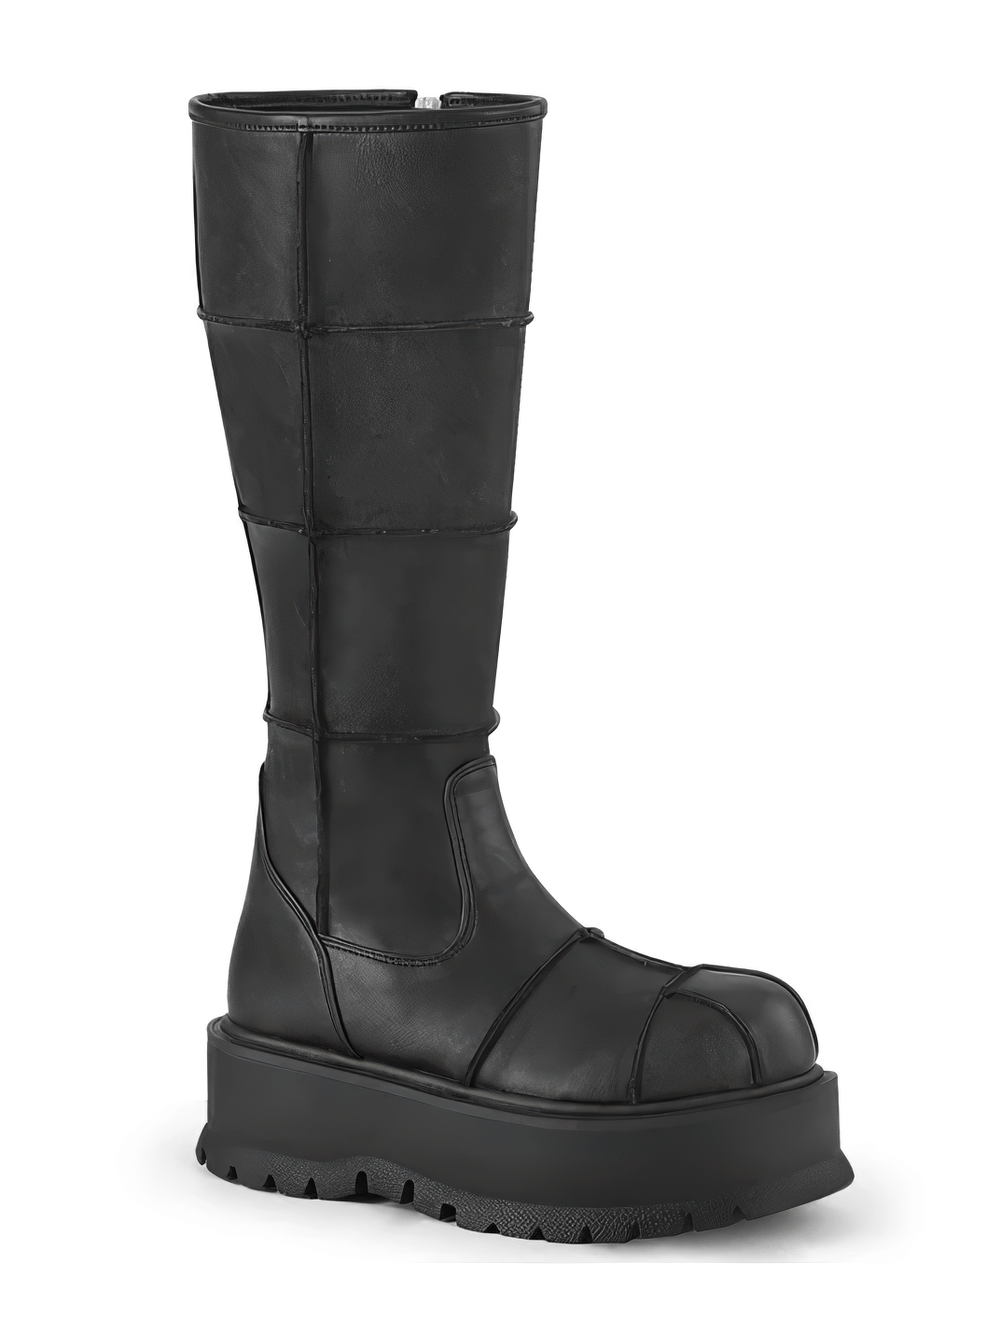 DEMONIA Women's Black Knee High Platform Boots